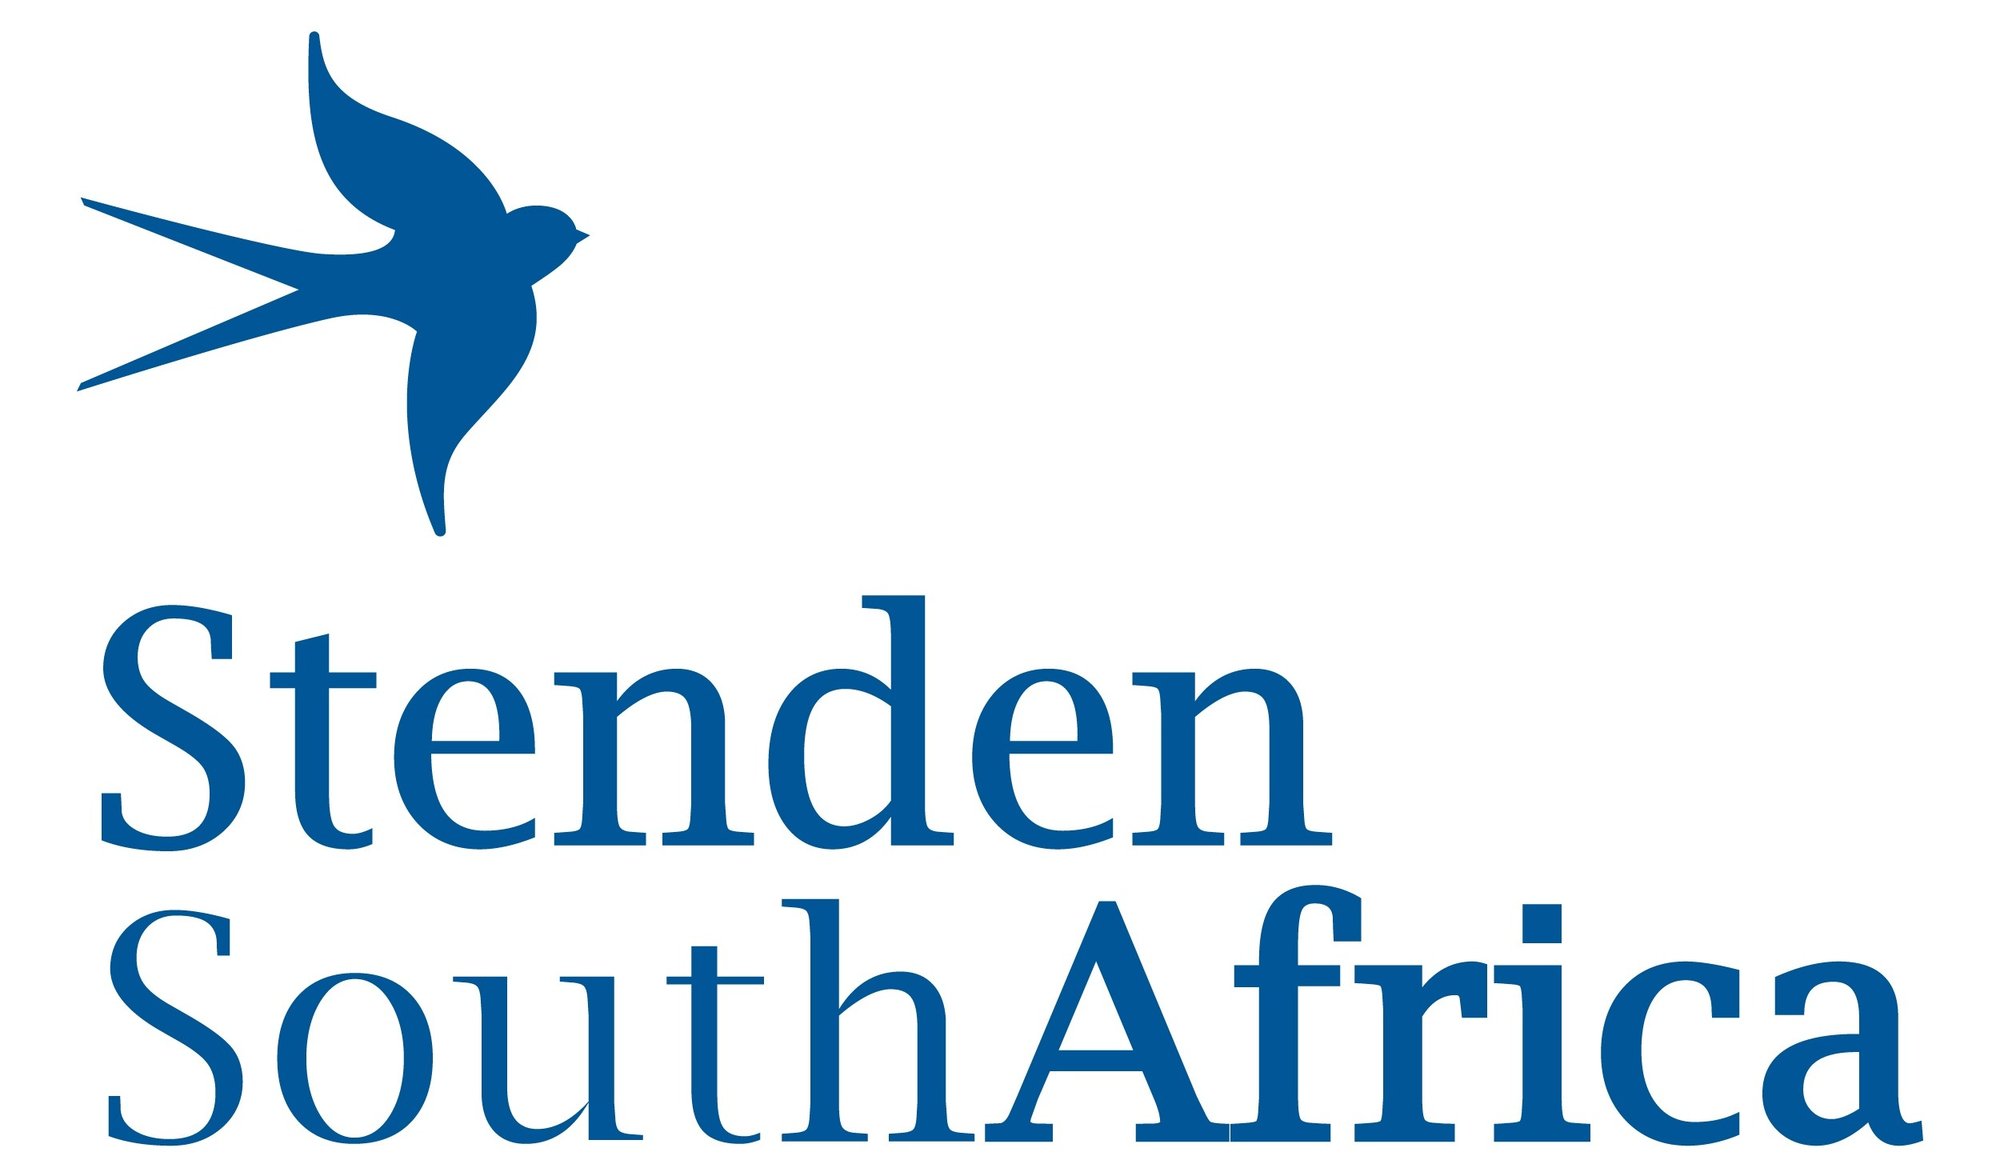 Stenden logo